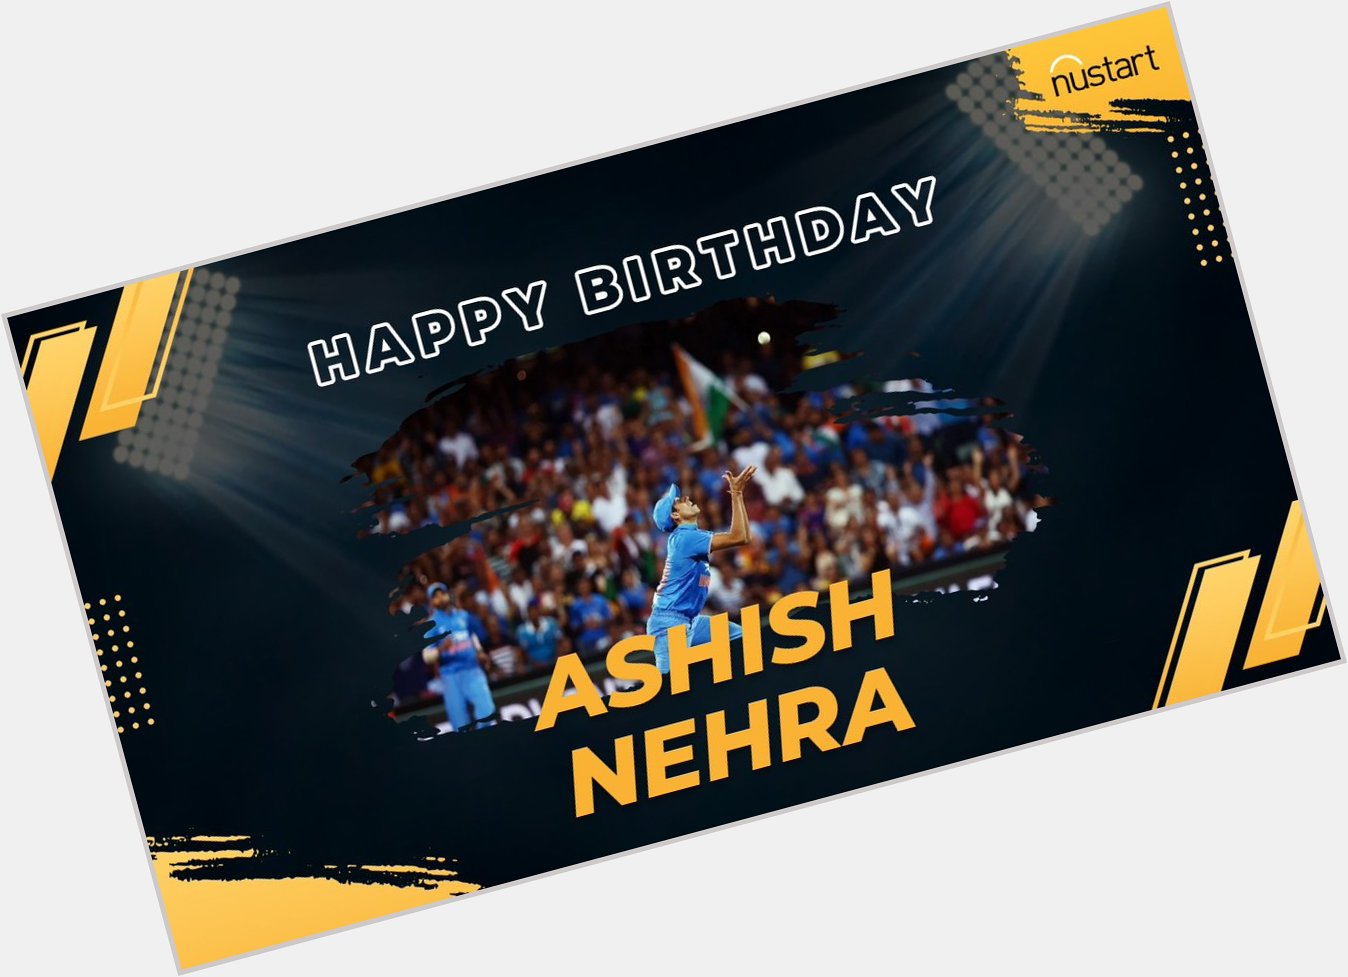  2011 winner

Wishing former pacer Ashish Nehra, a very happy birthday! 